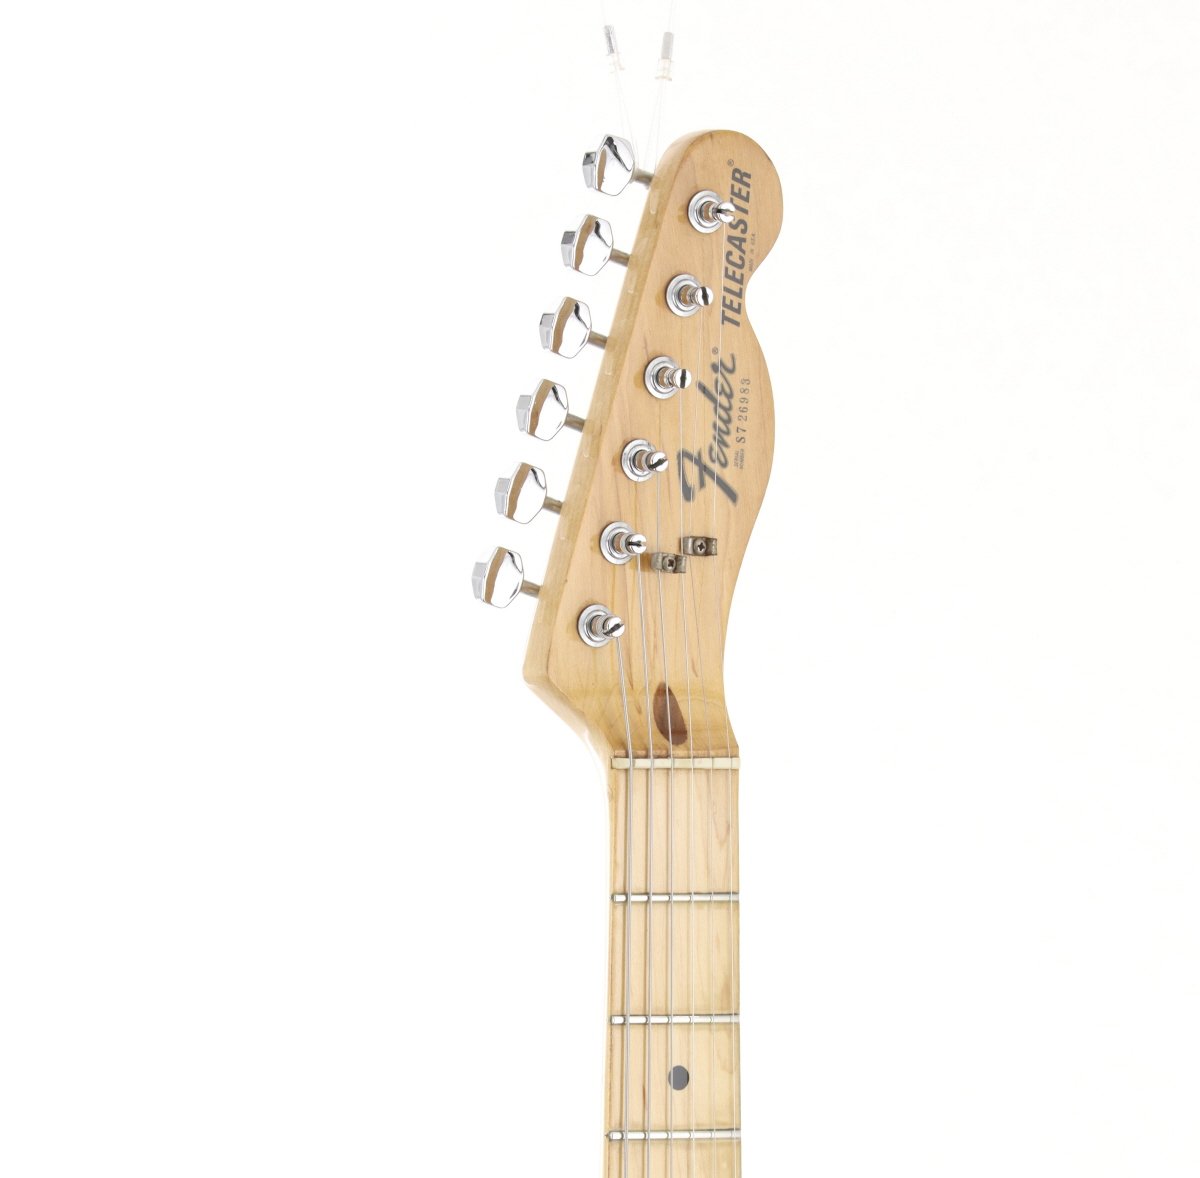 [SN S726983] USED Fender USA / Telecaster 1978 Natural [03]